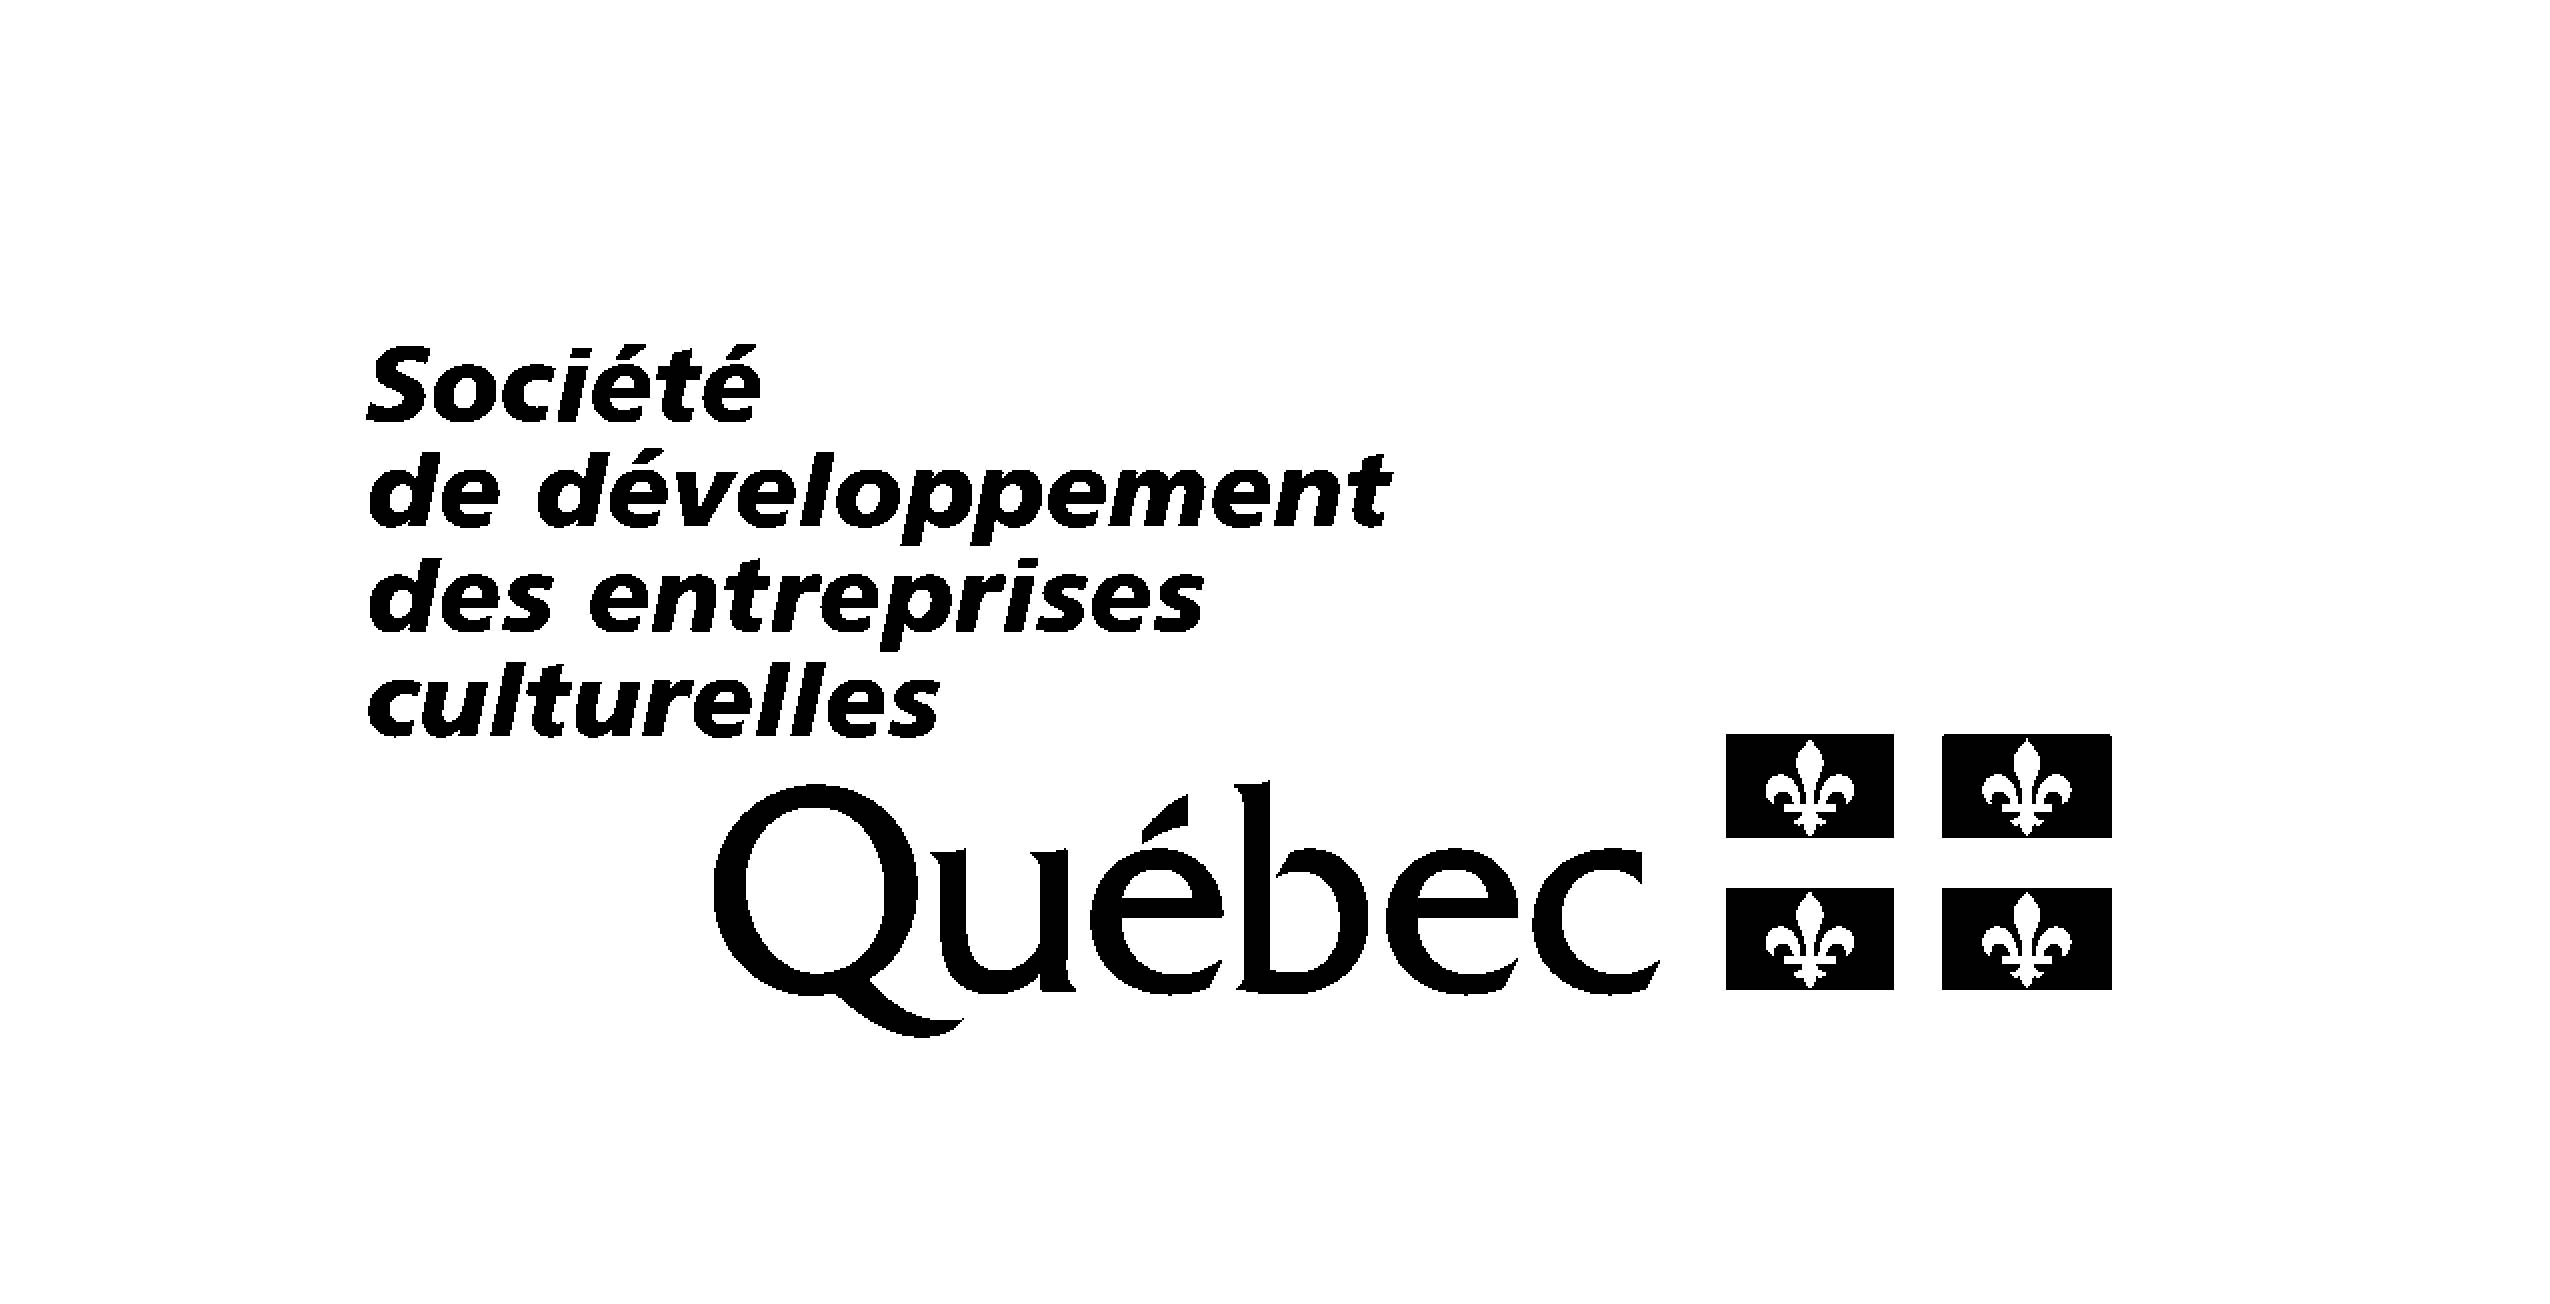 SODEC - Quebec logo background by sixmonthslate on DeviantArt